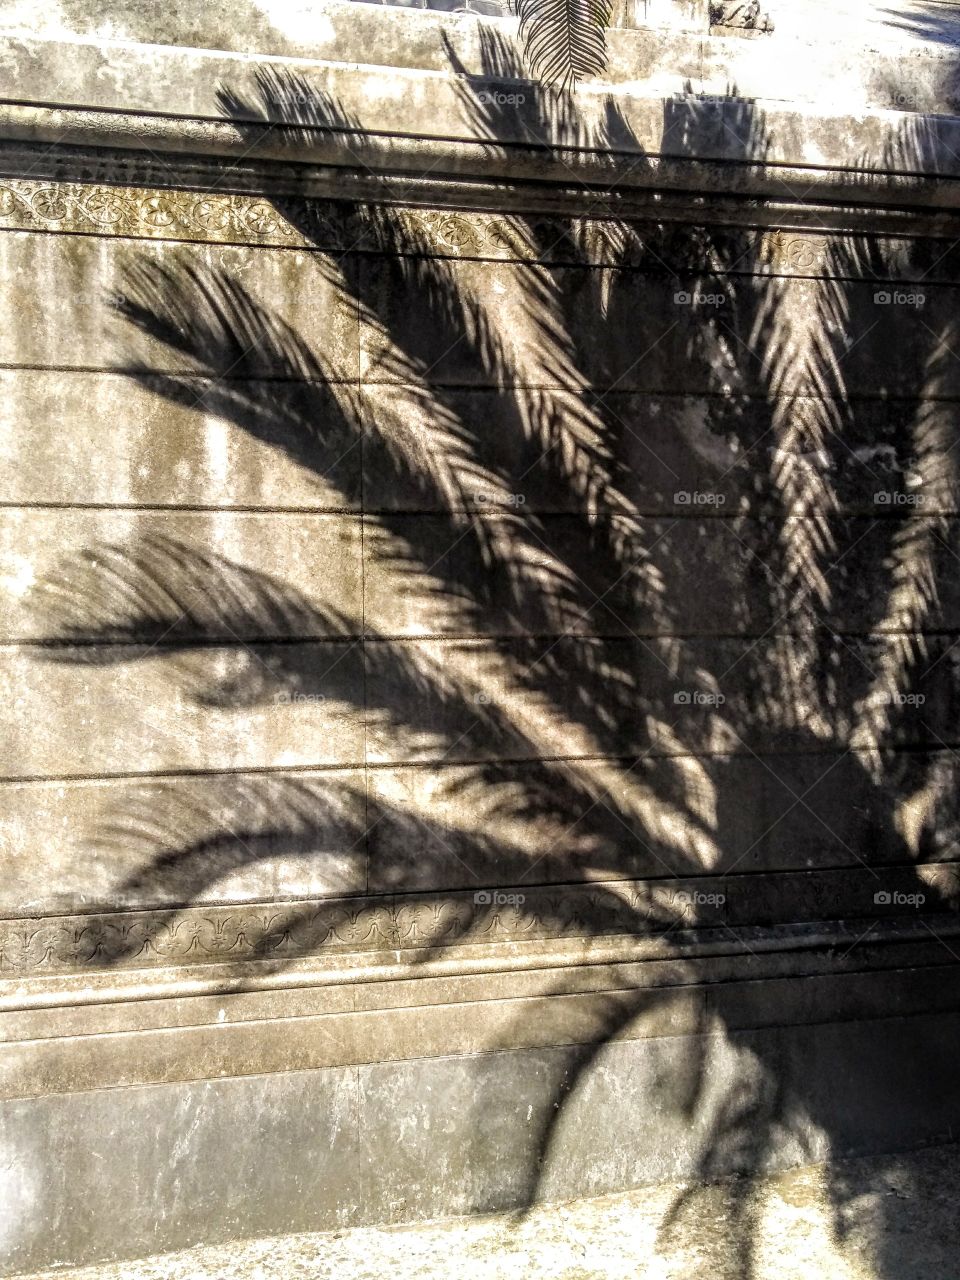 Palm tree reflection